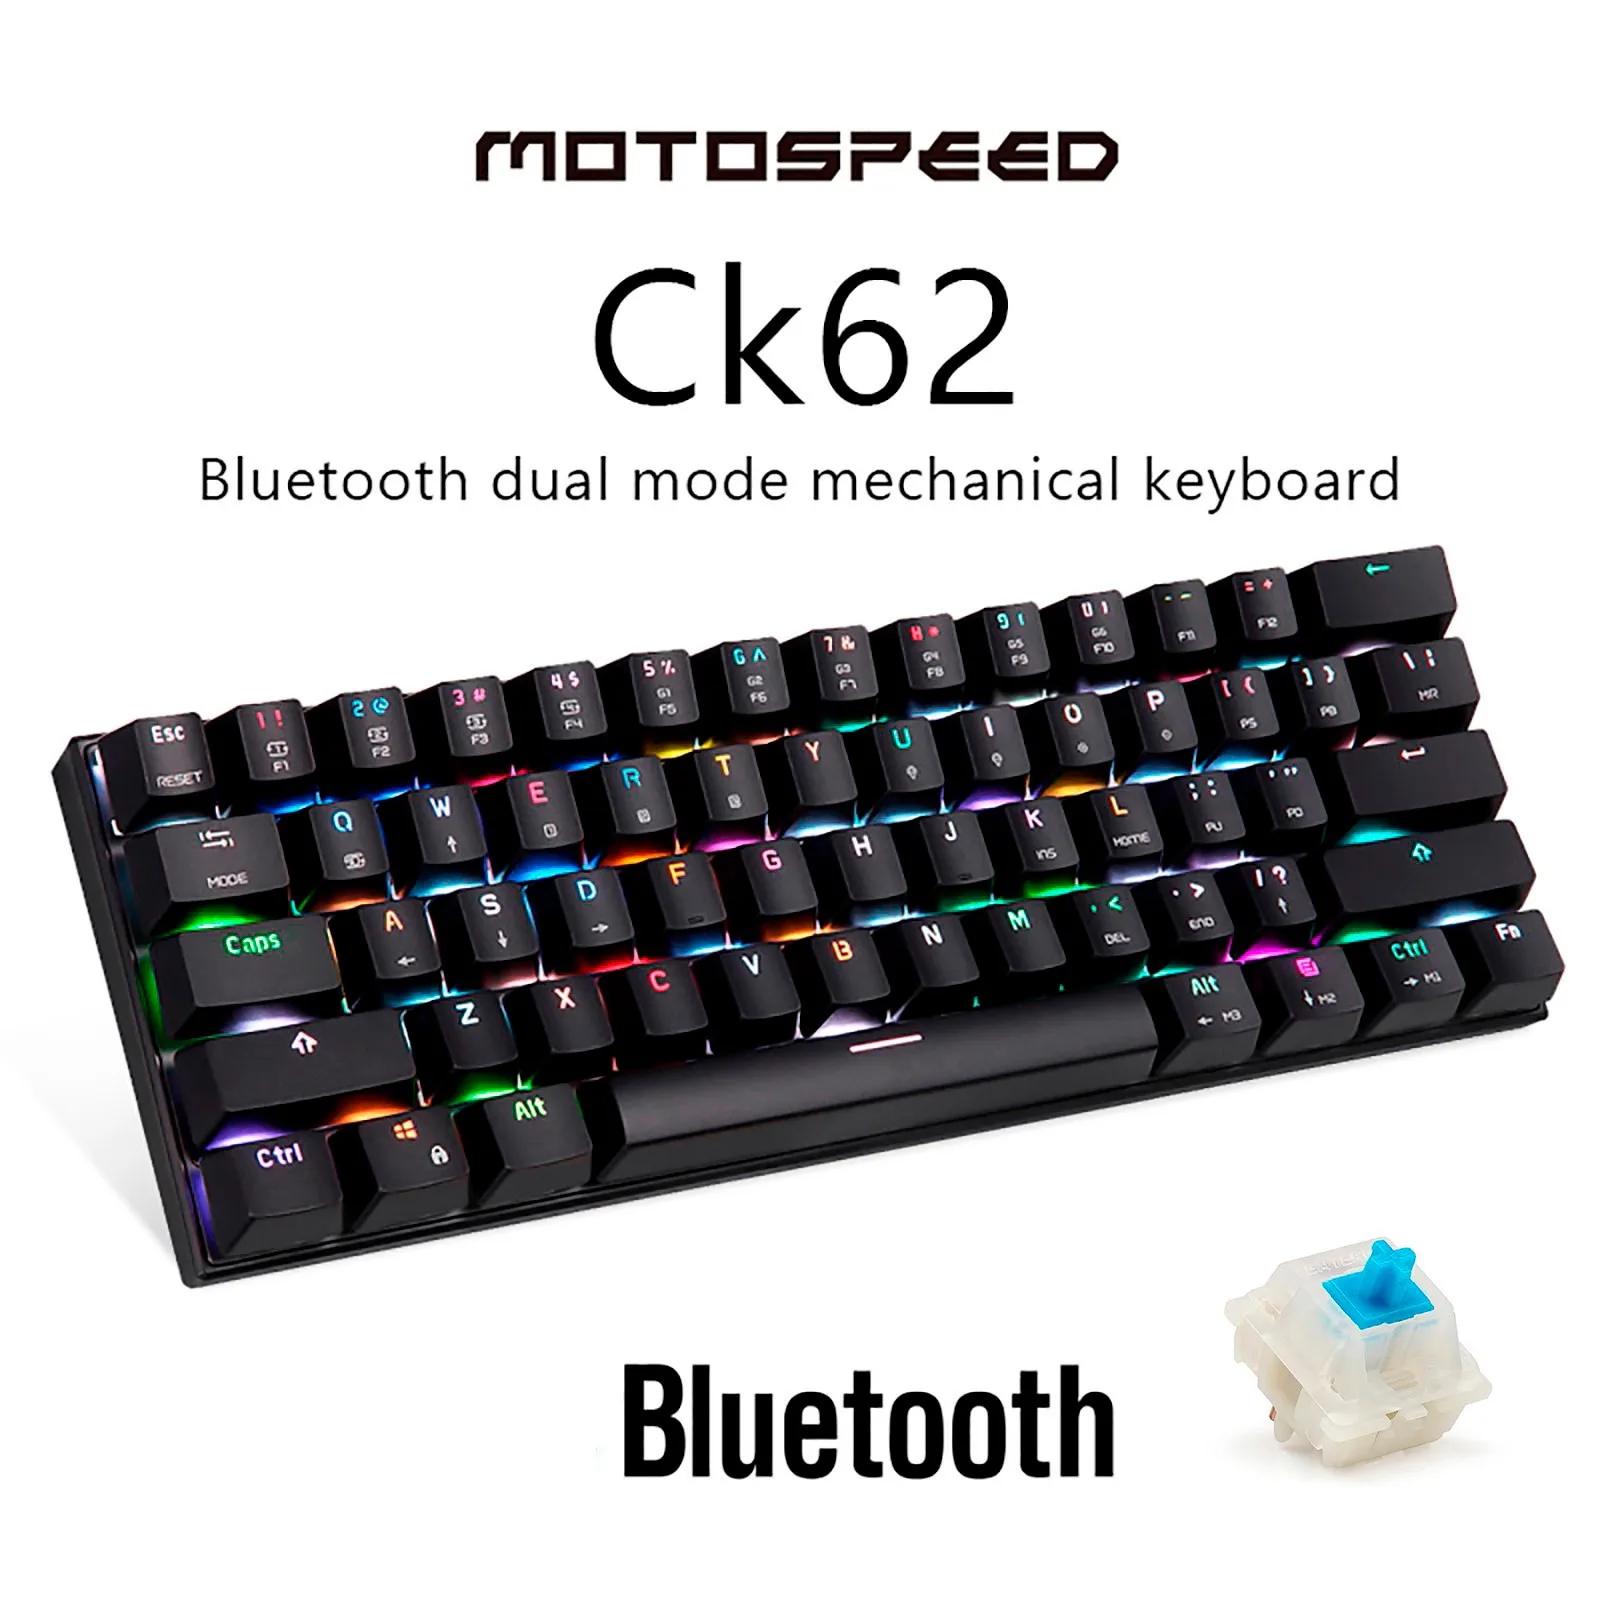 

Motospeed Ck62 Usb Wired Bluetooth Wireless Dual Mode Mechanical Rgb Backlit Gaming Keyboard , 61 Keys Portable Mini Keyboard